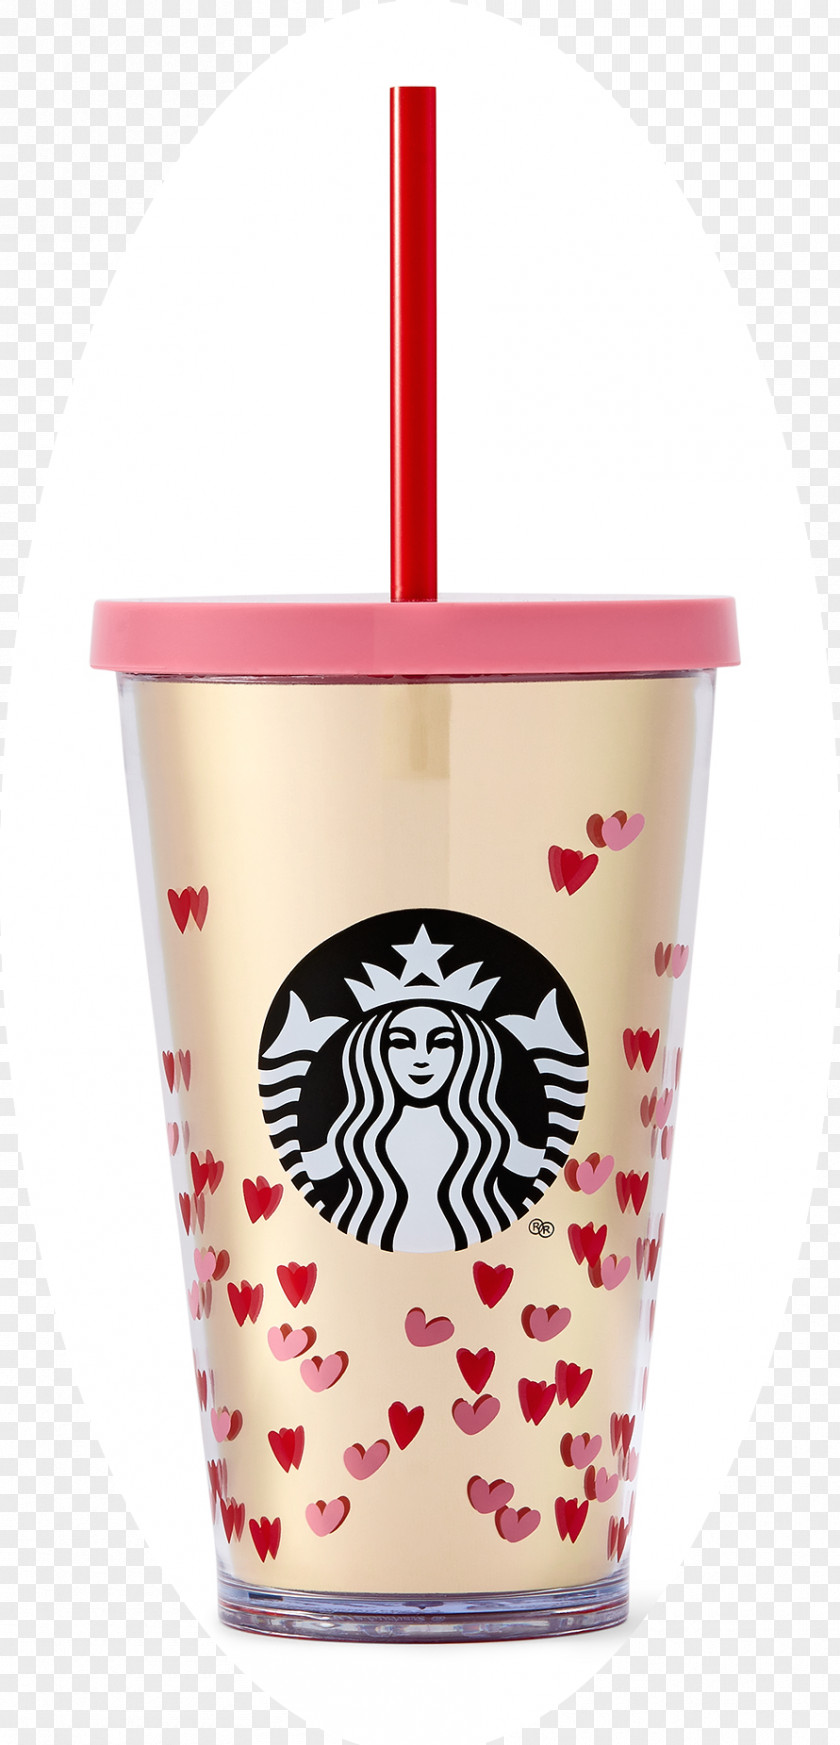 Coffee Starbucks Cup Mug Valentine's Day PNG